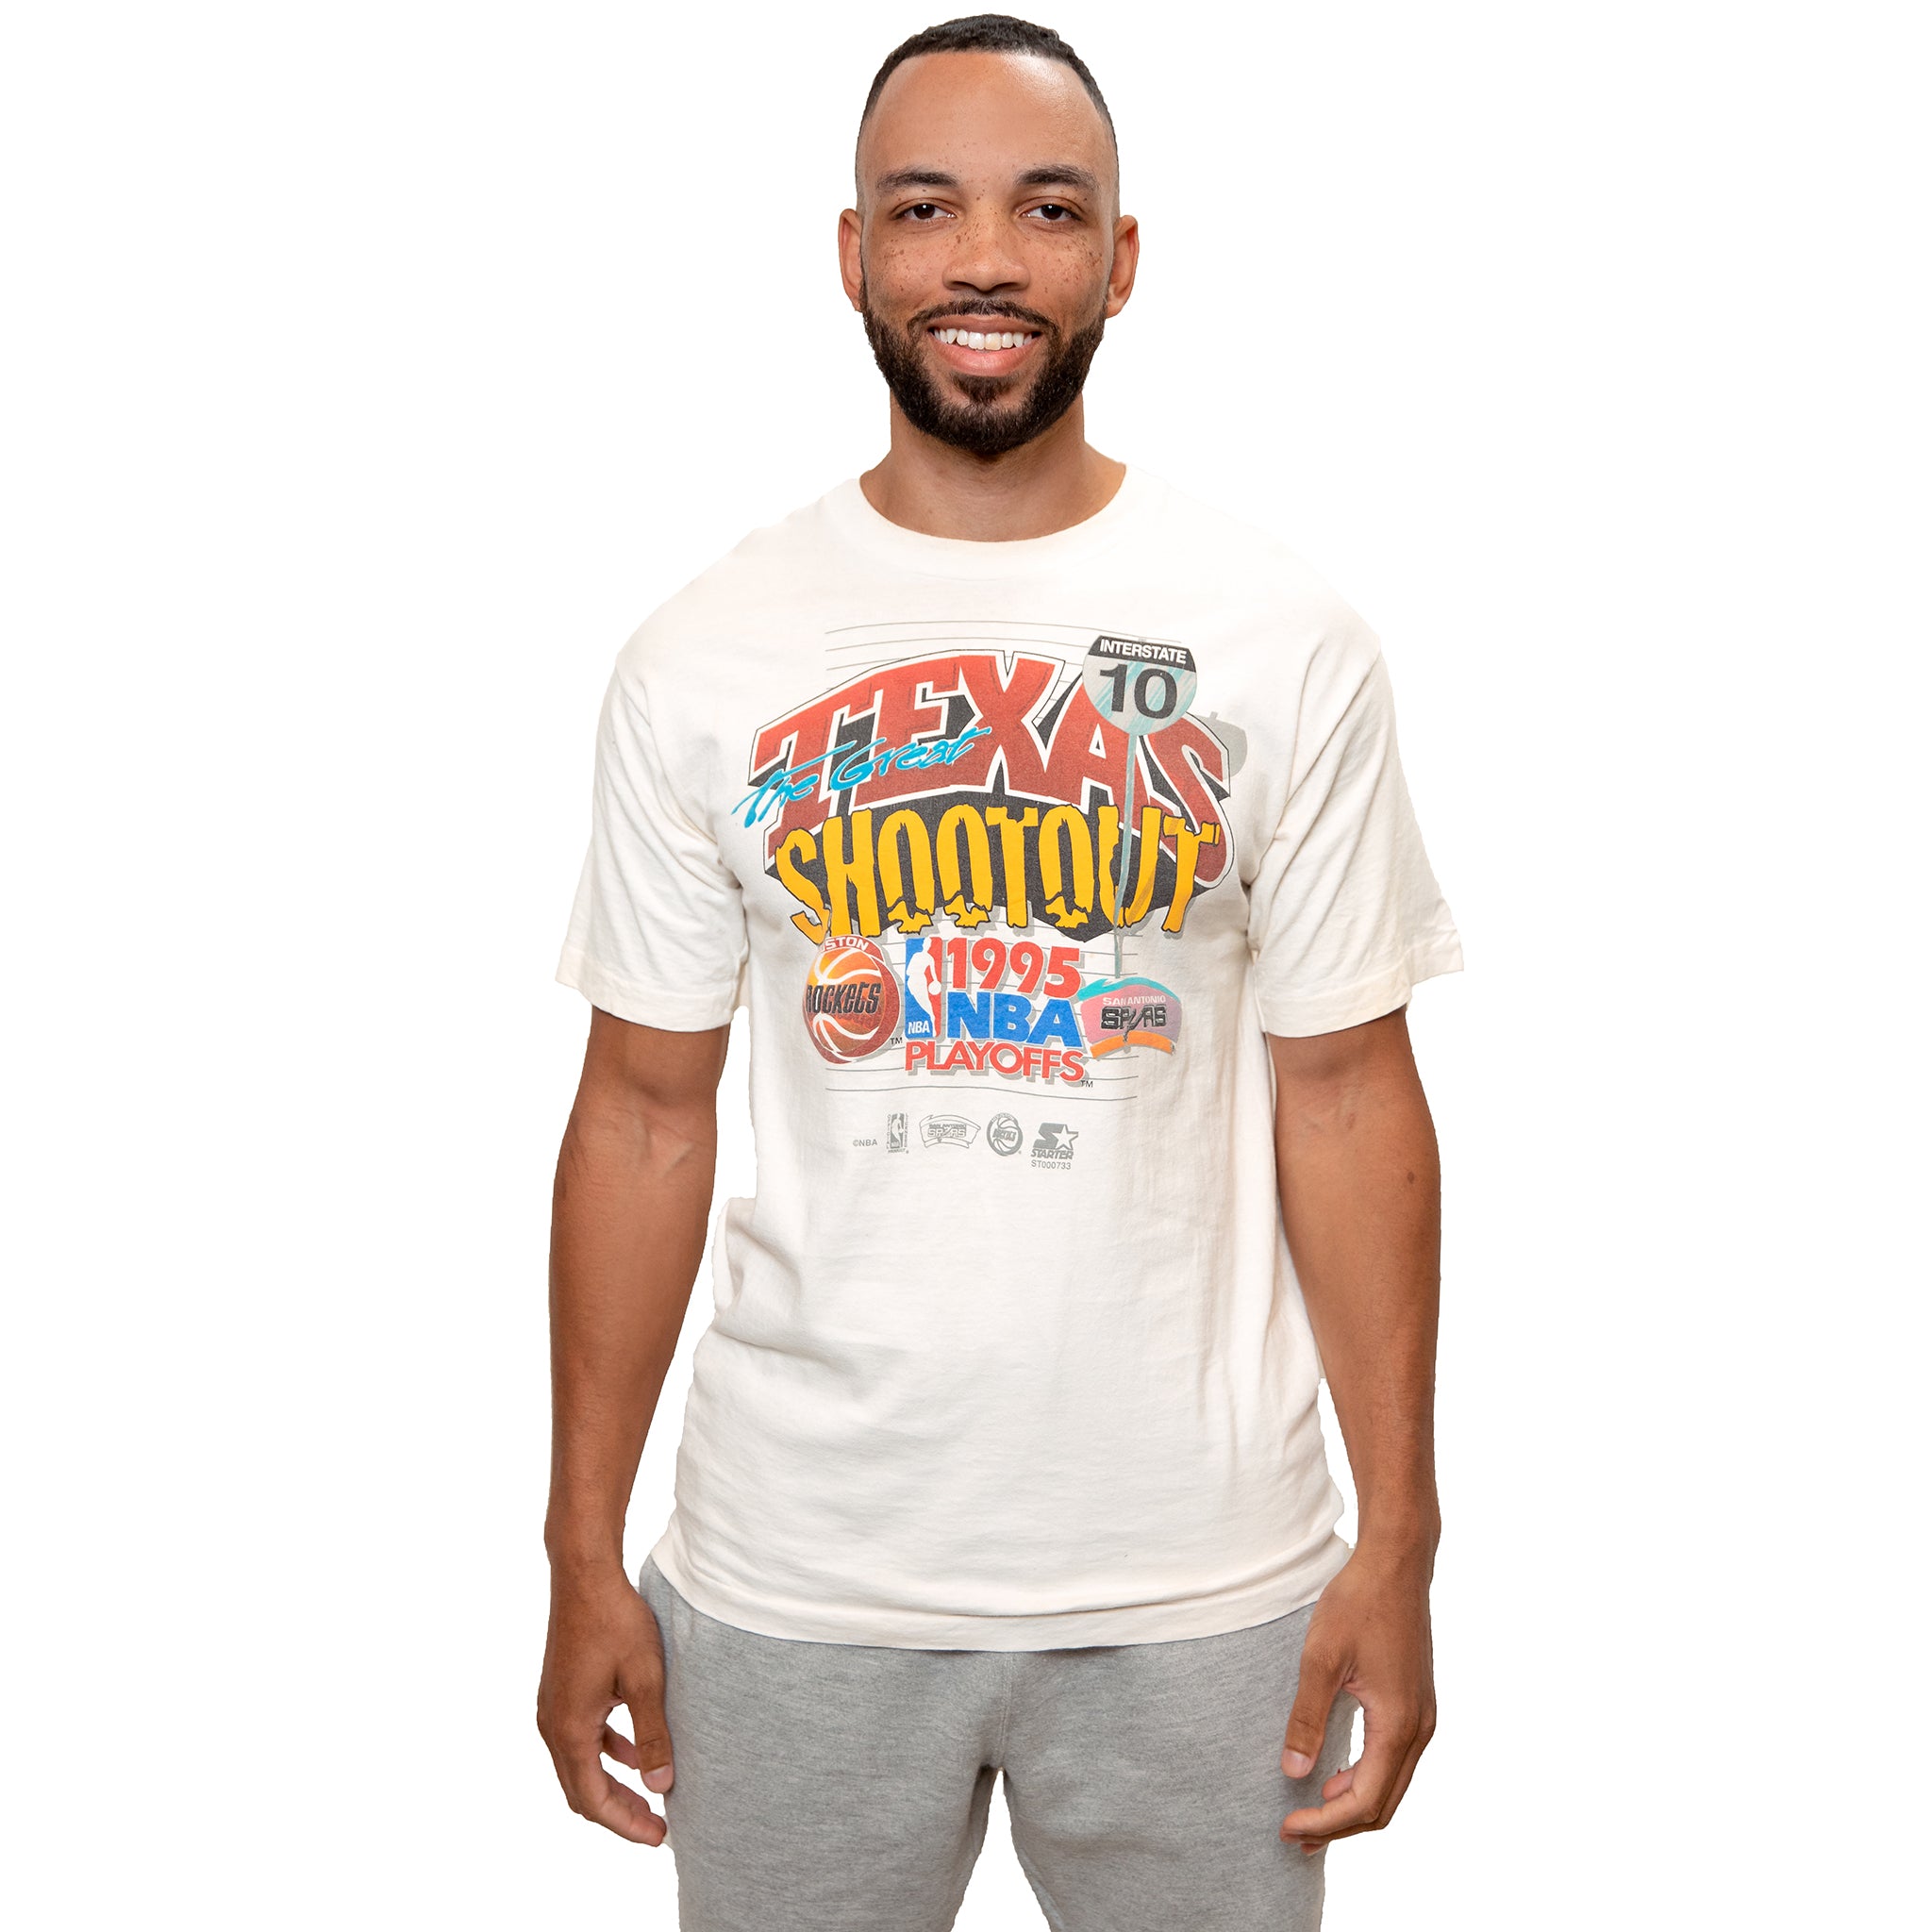 San Antonio Spurs NBA Fans Gift Hawaiian Shirt - Freedomdesign